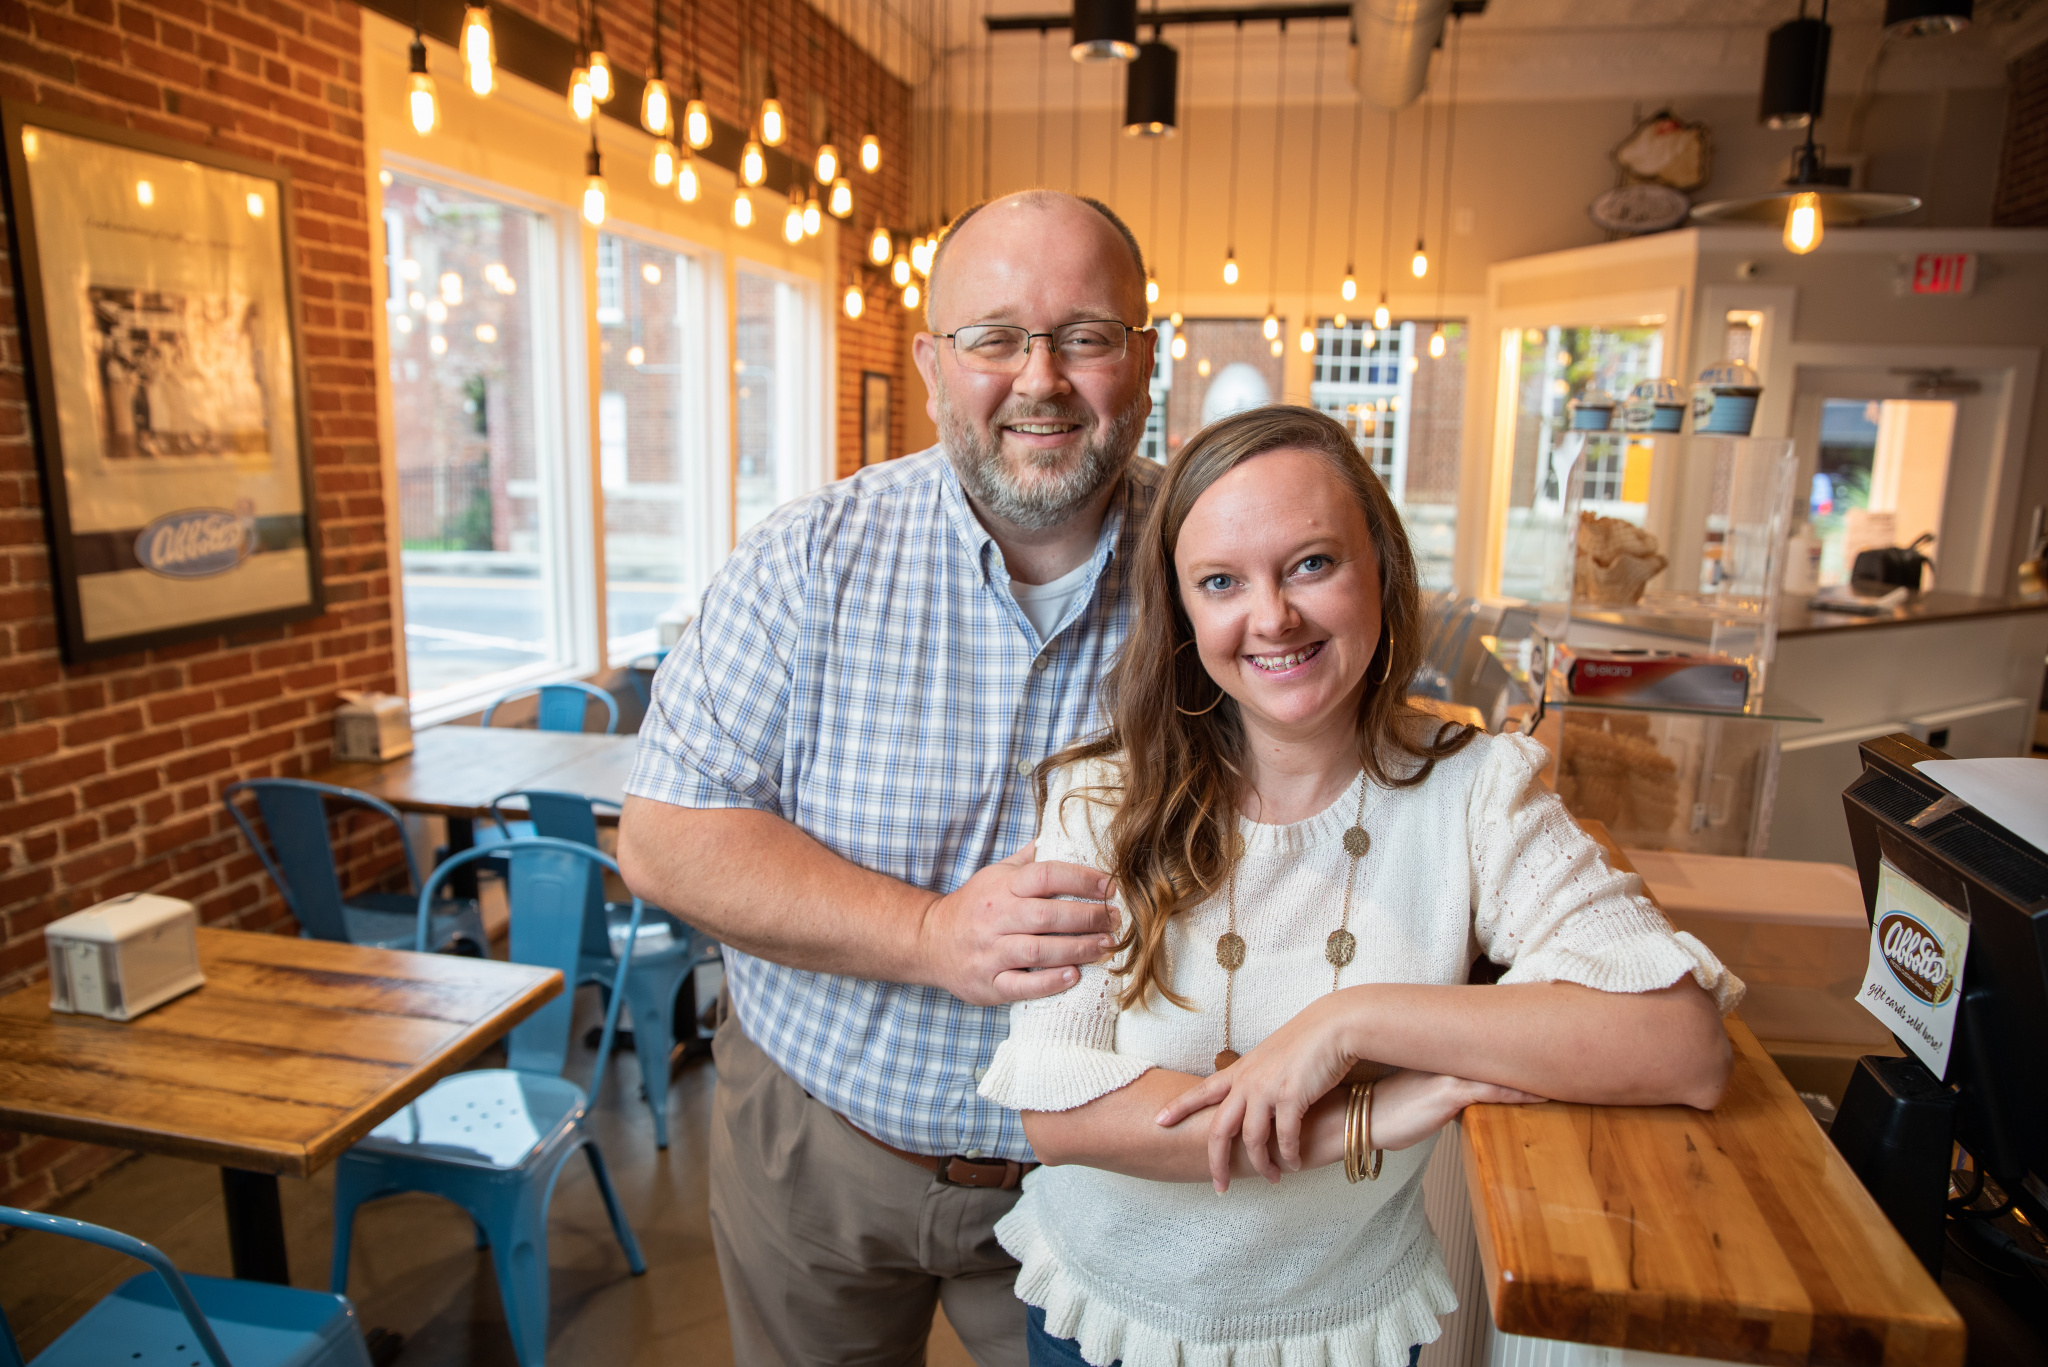 Mark Hopper with his wife Amanda, owners of Abbott's Frozen Custard in Greer, SC